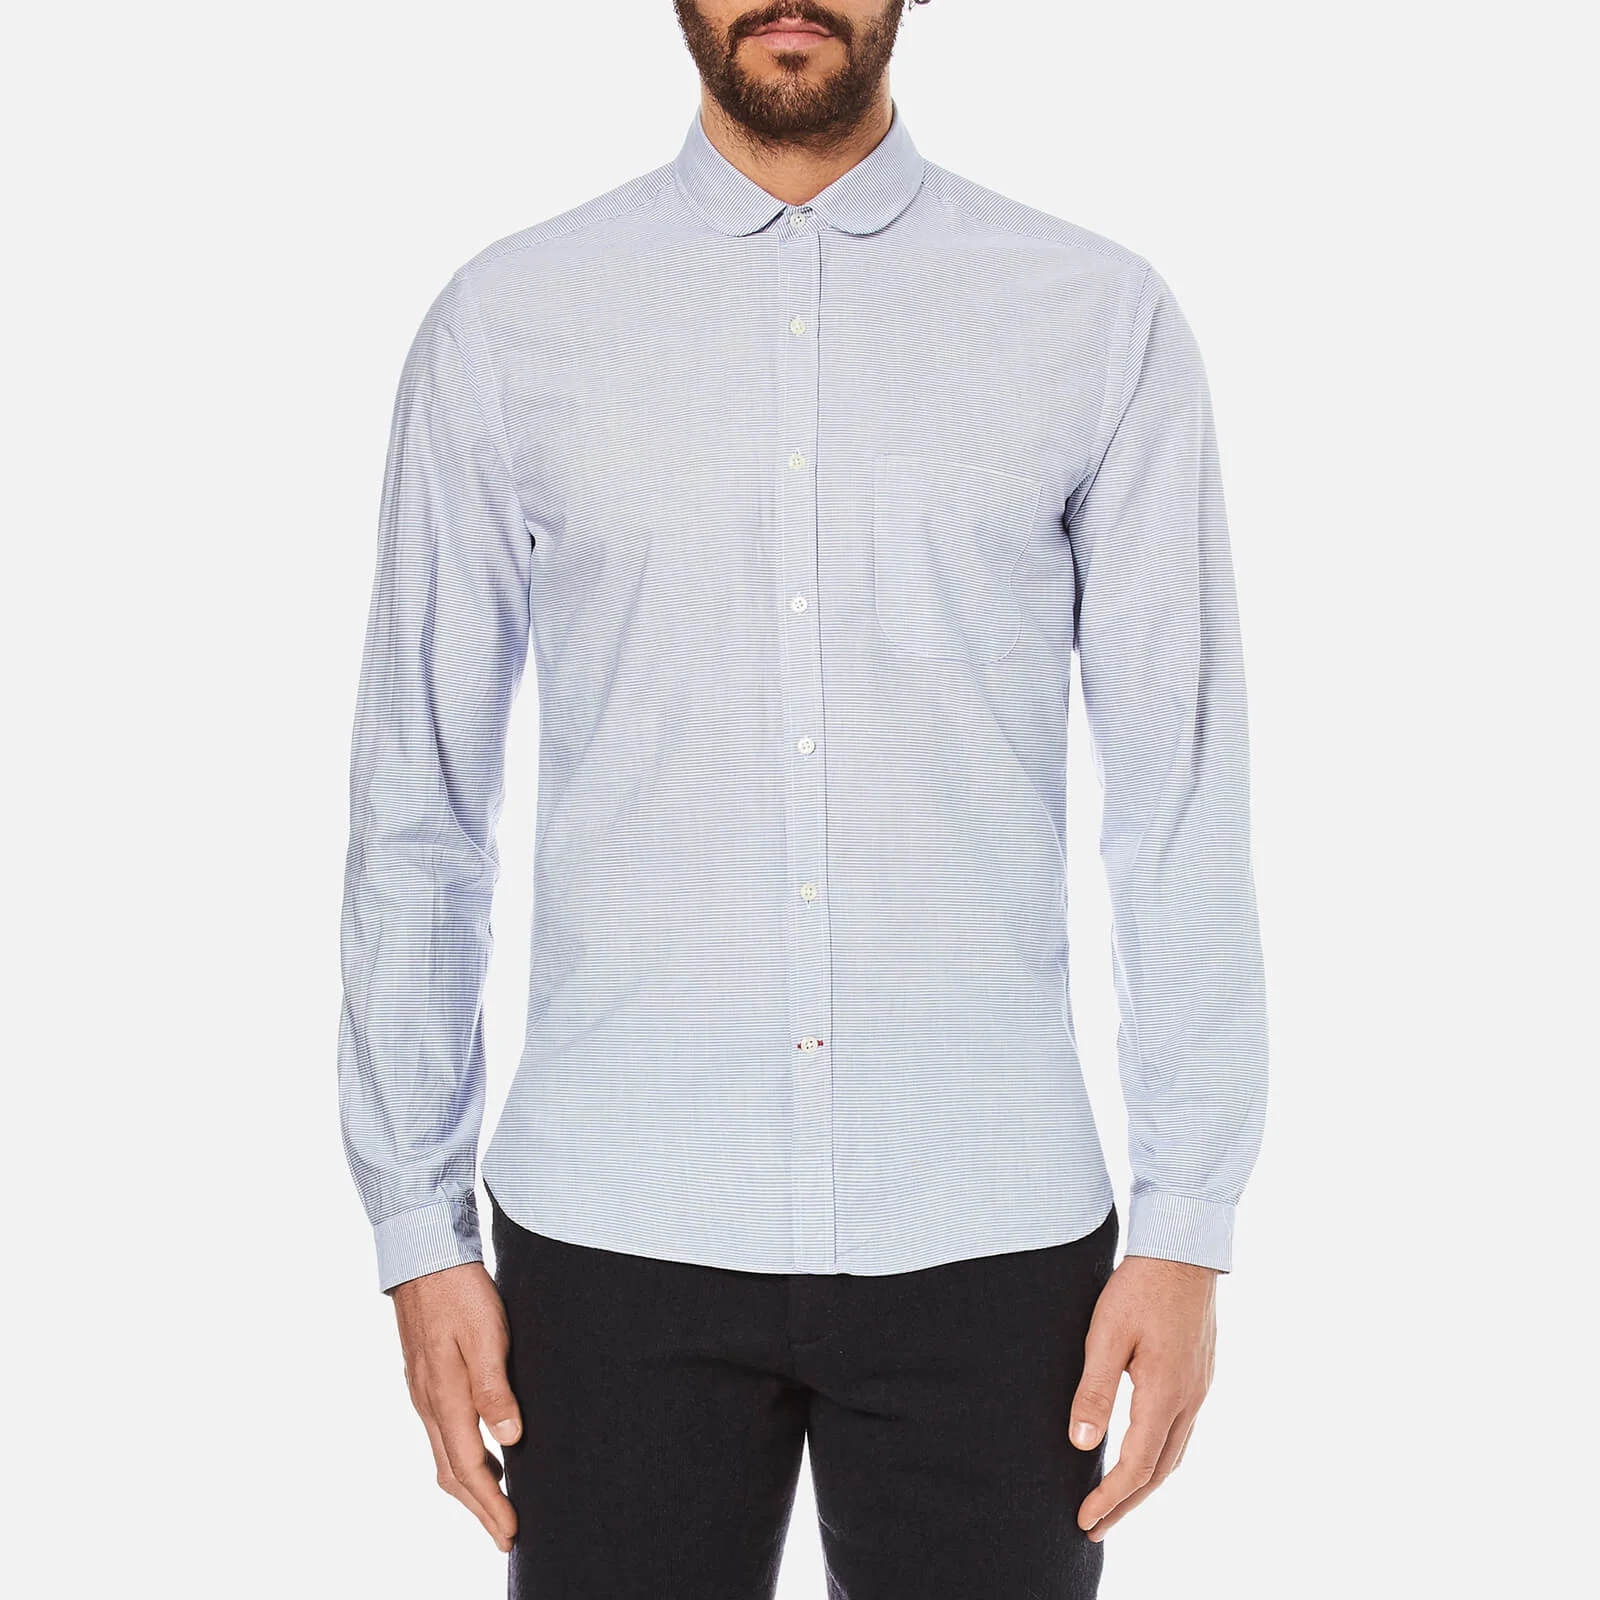 Oliver Spencer Men's Eton Collar Shirt - Broadstone Sky Image 1